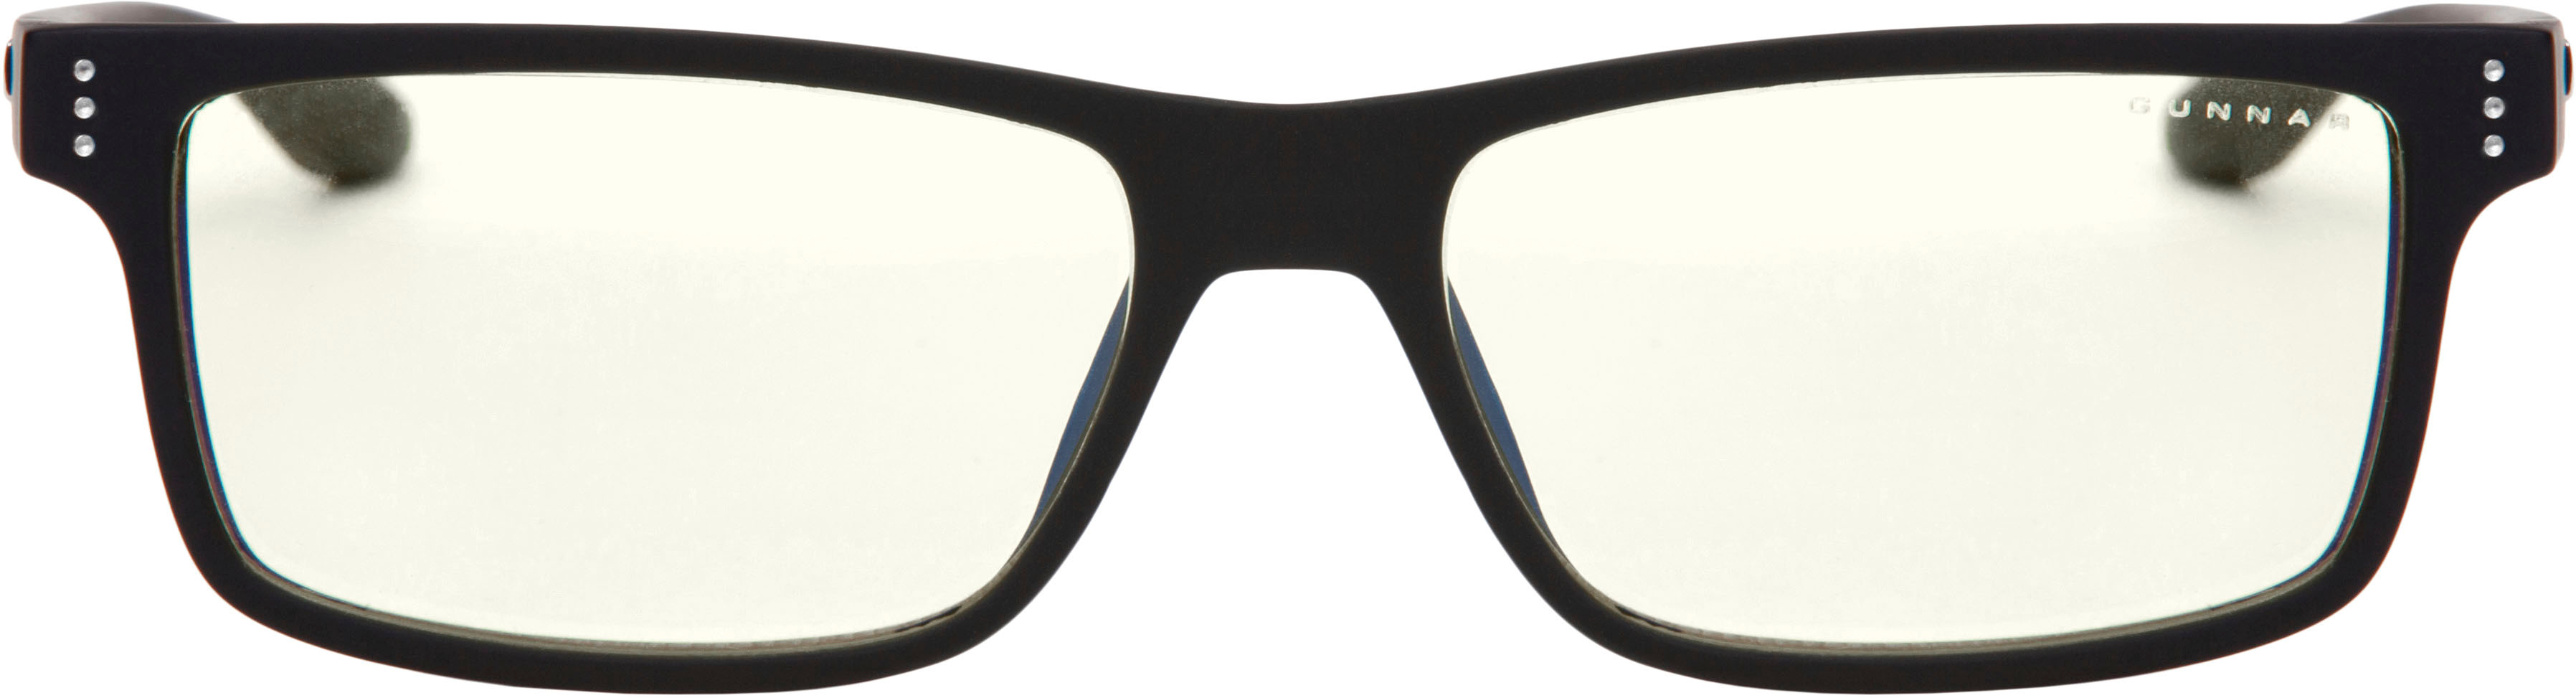 Angle View: GUNNAR - Blue Light Reading Glasses - Vertex +1.5 - Onyx